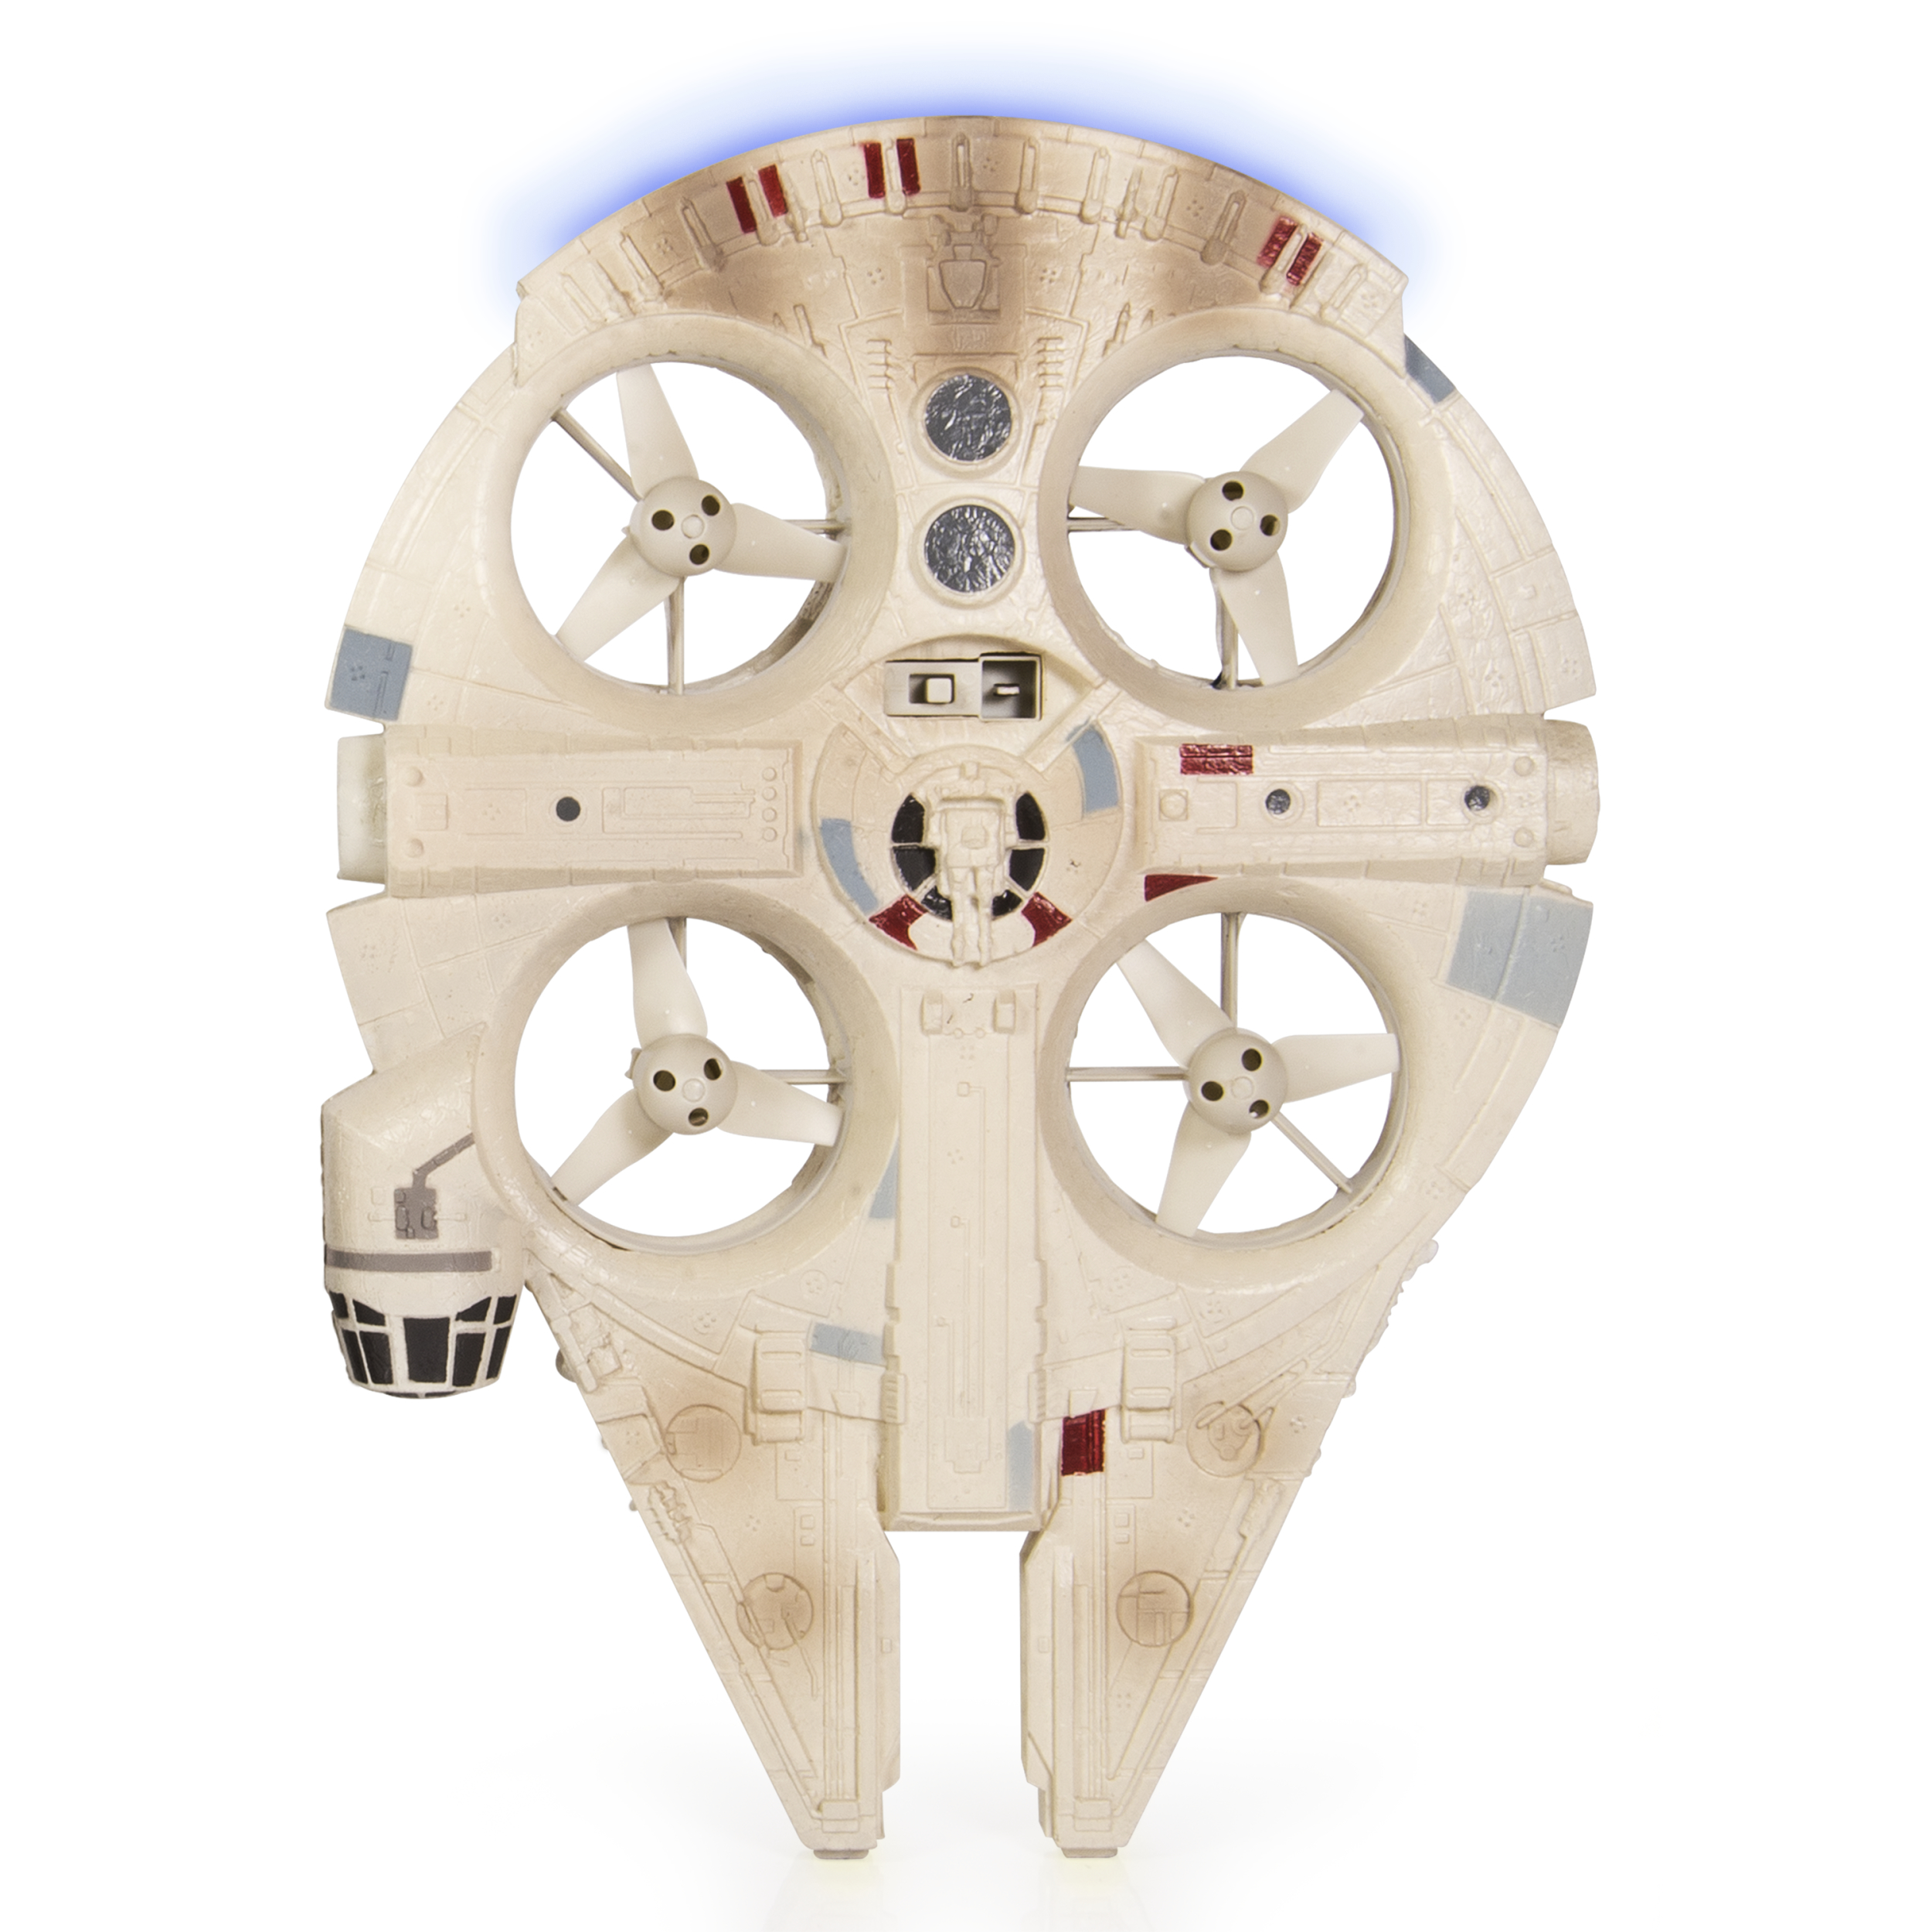 Air Hogs Star Wars Remote Control Ultimate Millennium Falcon Quad - image 4 of 8